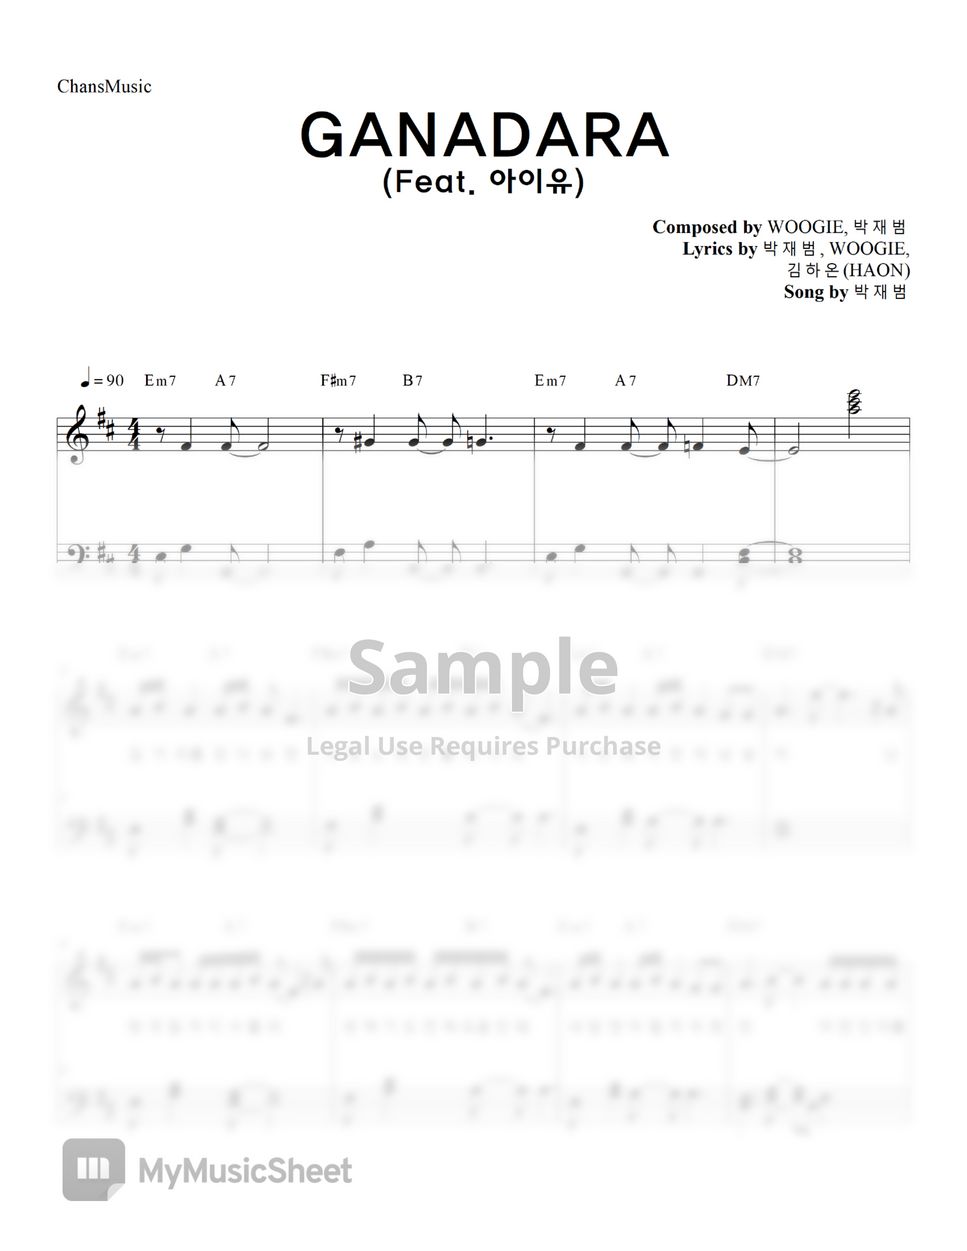 Jay Park - GANADARA (Feat. IU) (Easy Version) by ChansMusic